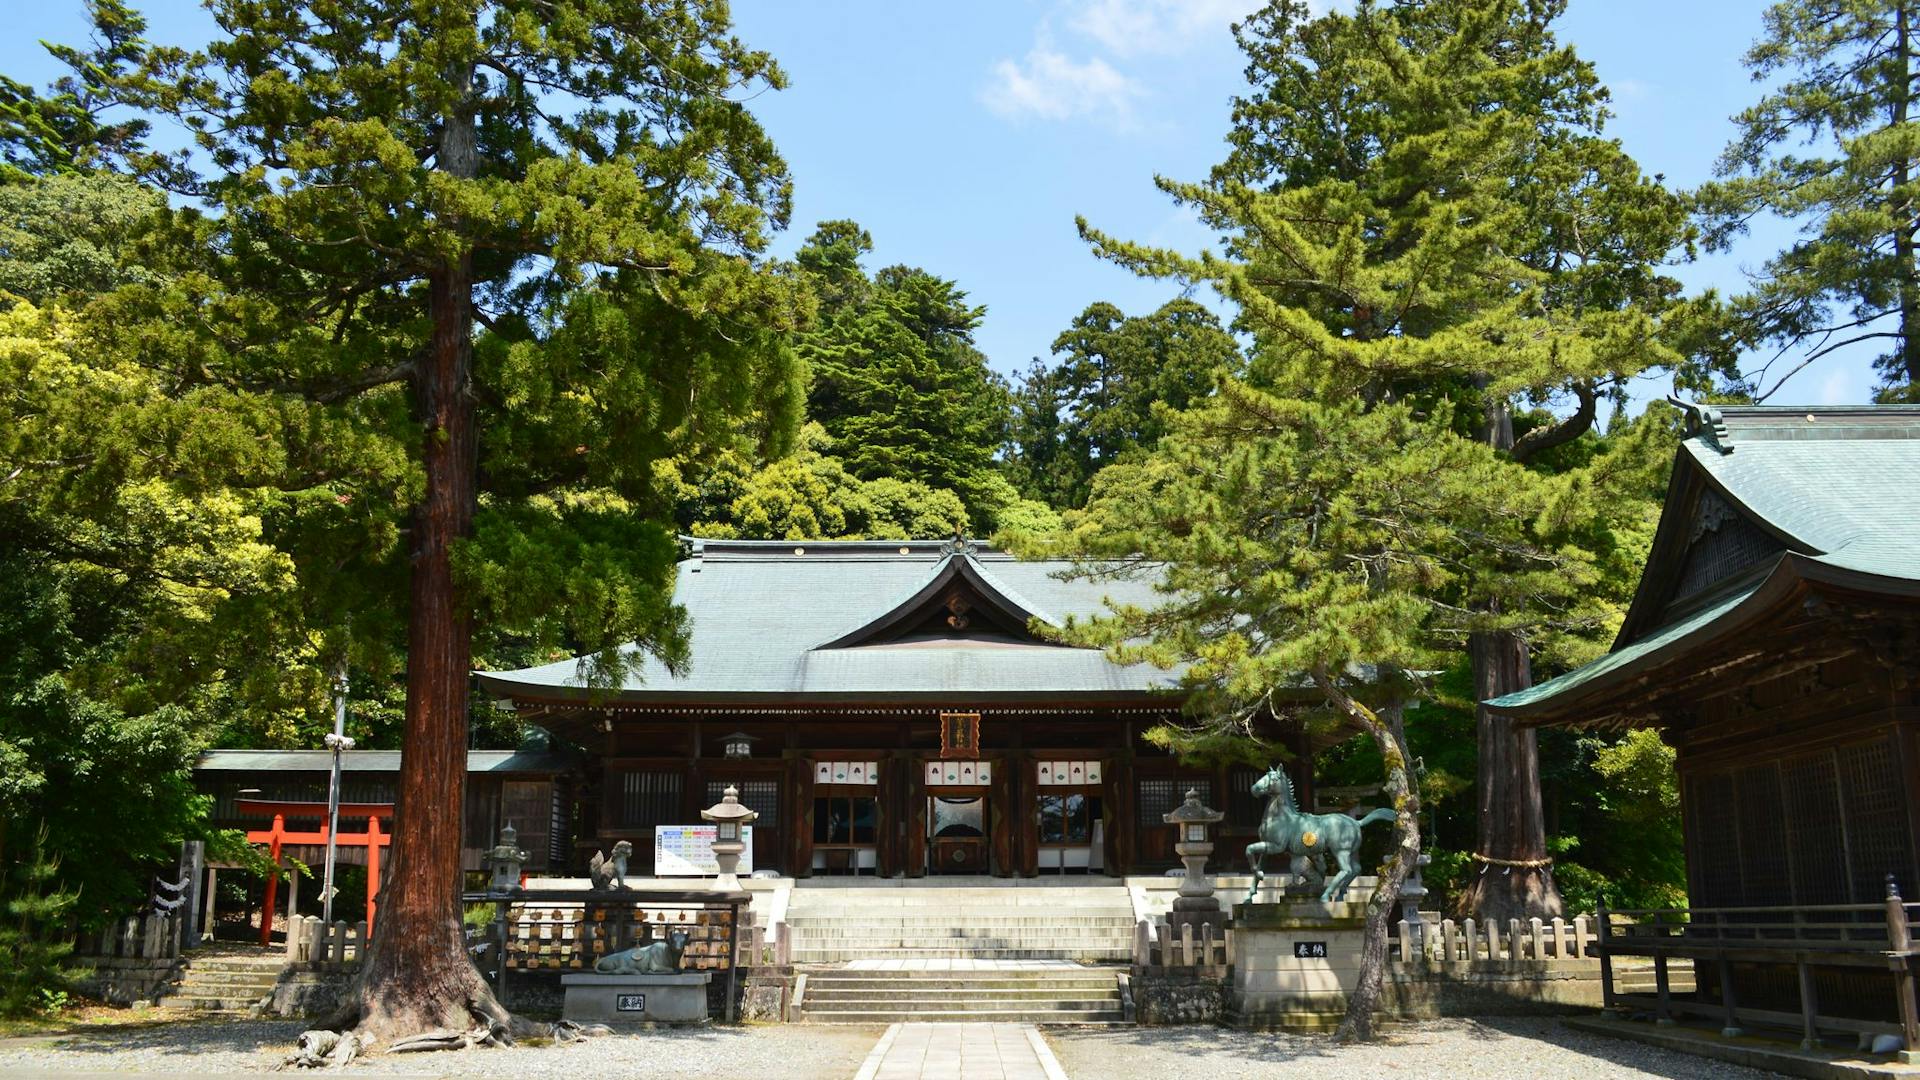 Sugou Ishibe Shrine